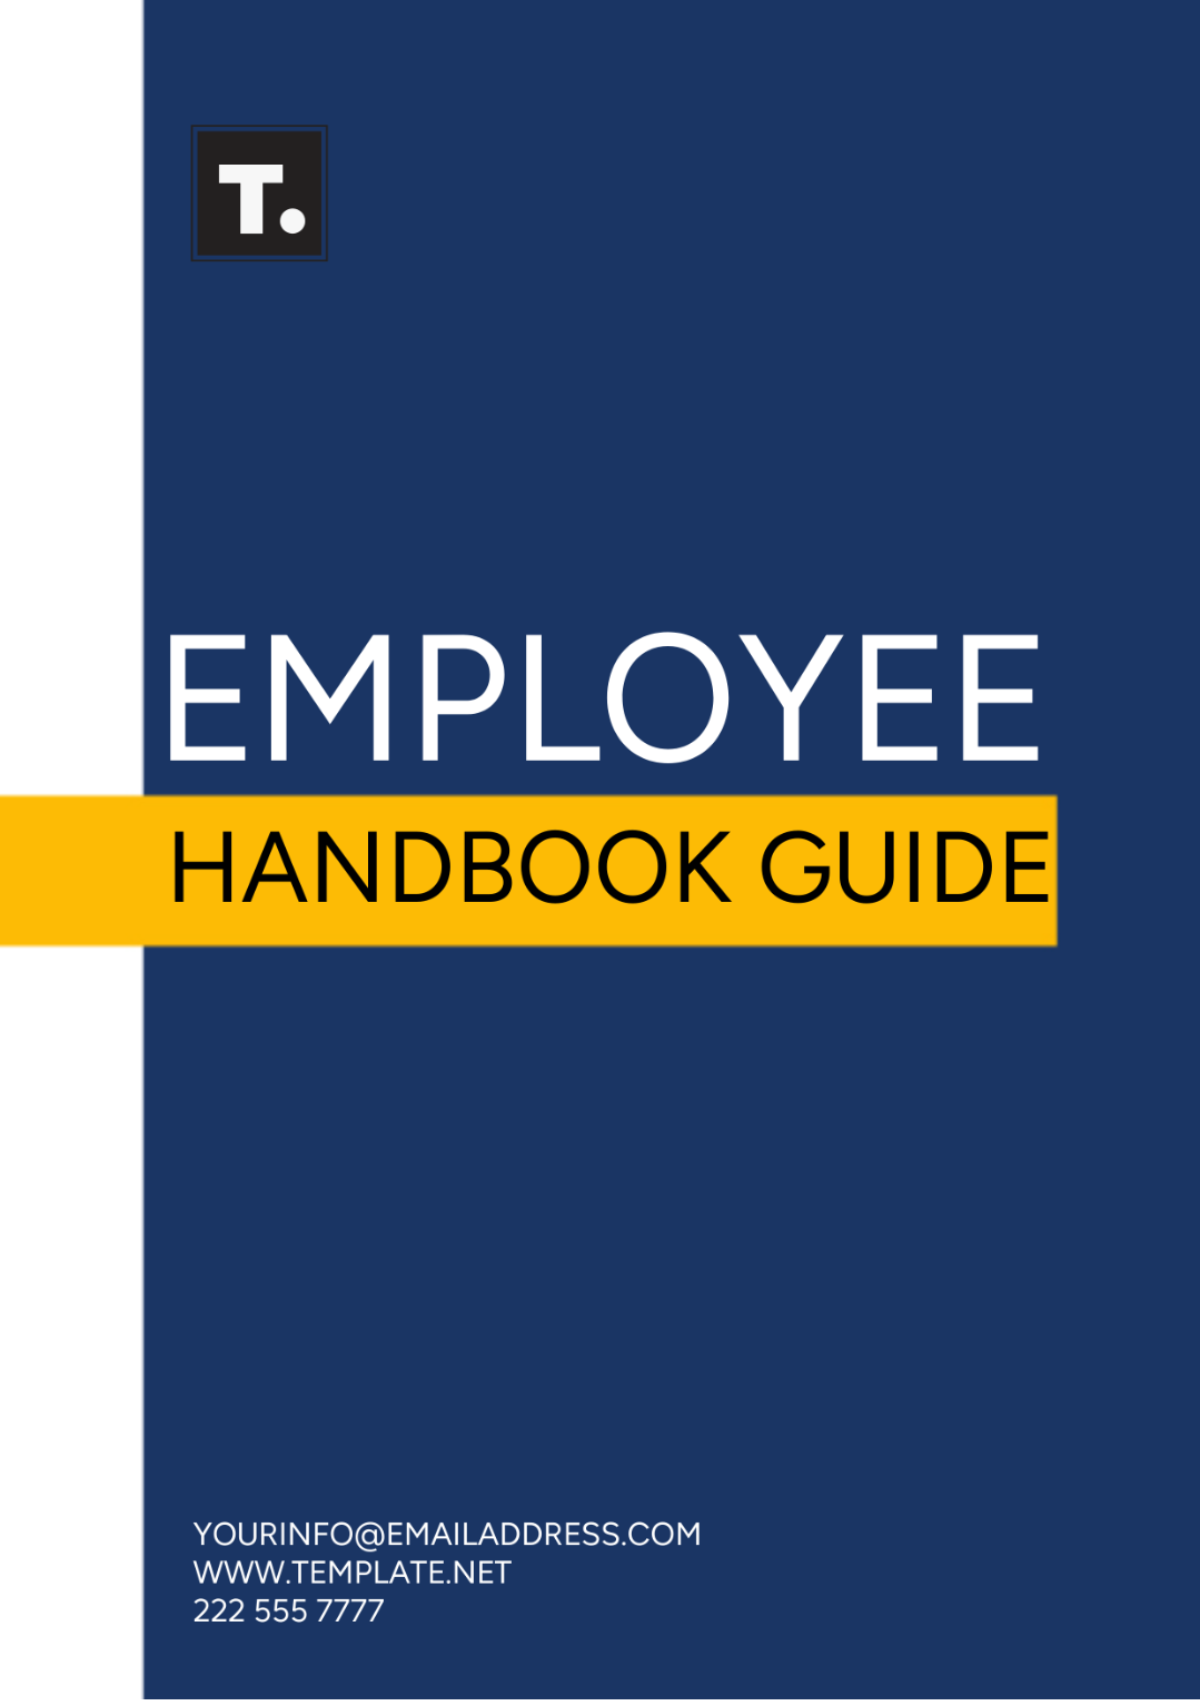 Free Employee Handbook Guide Template